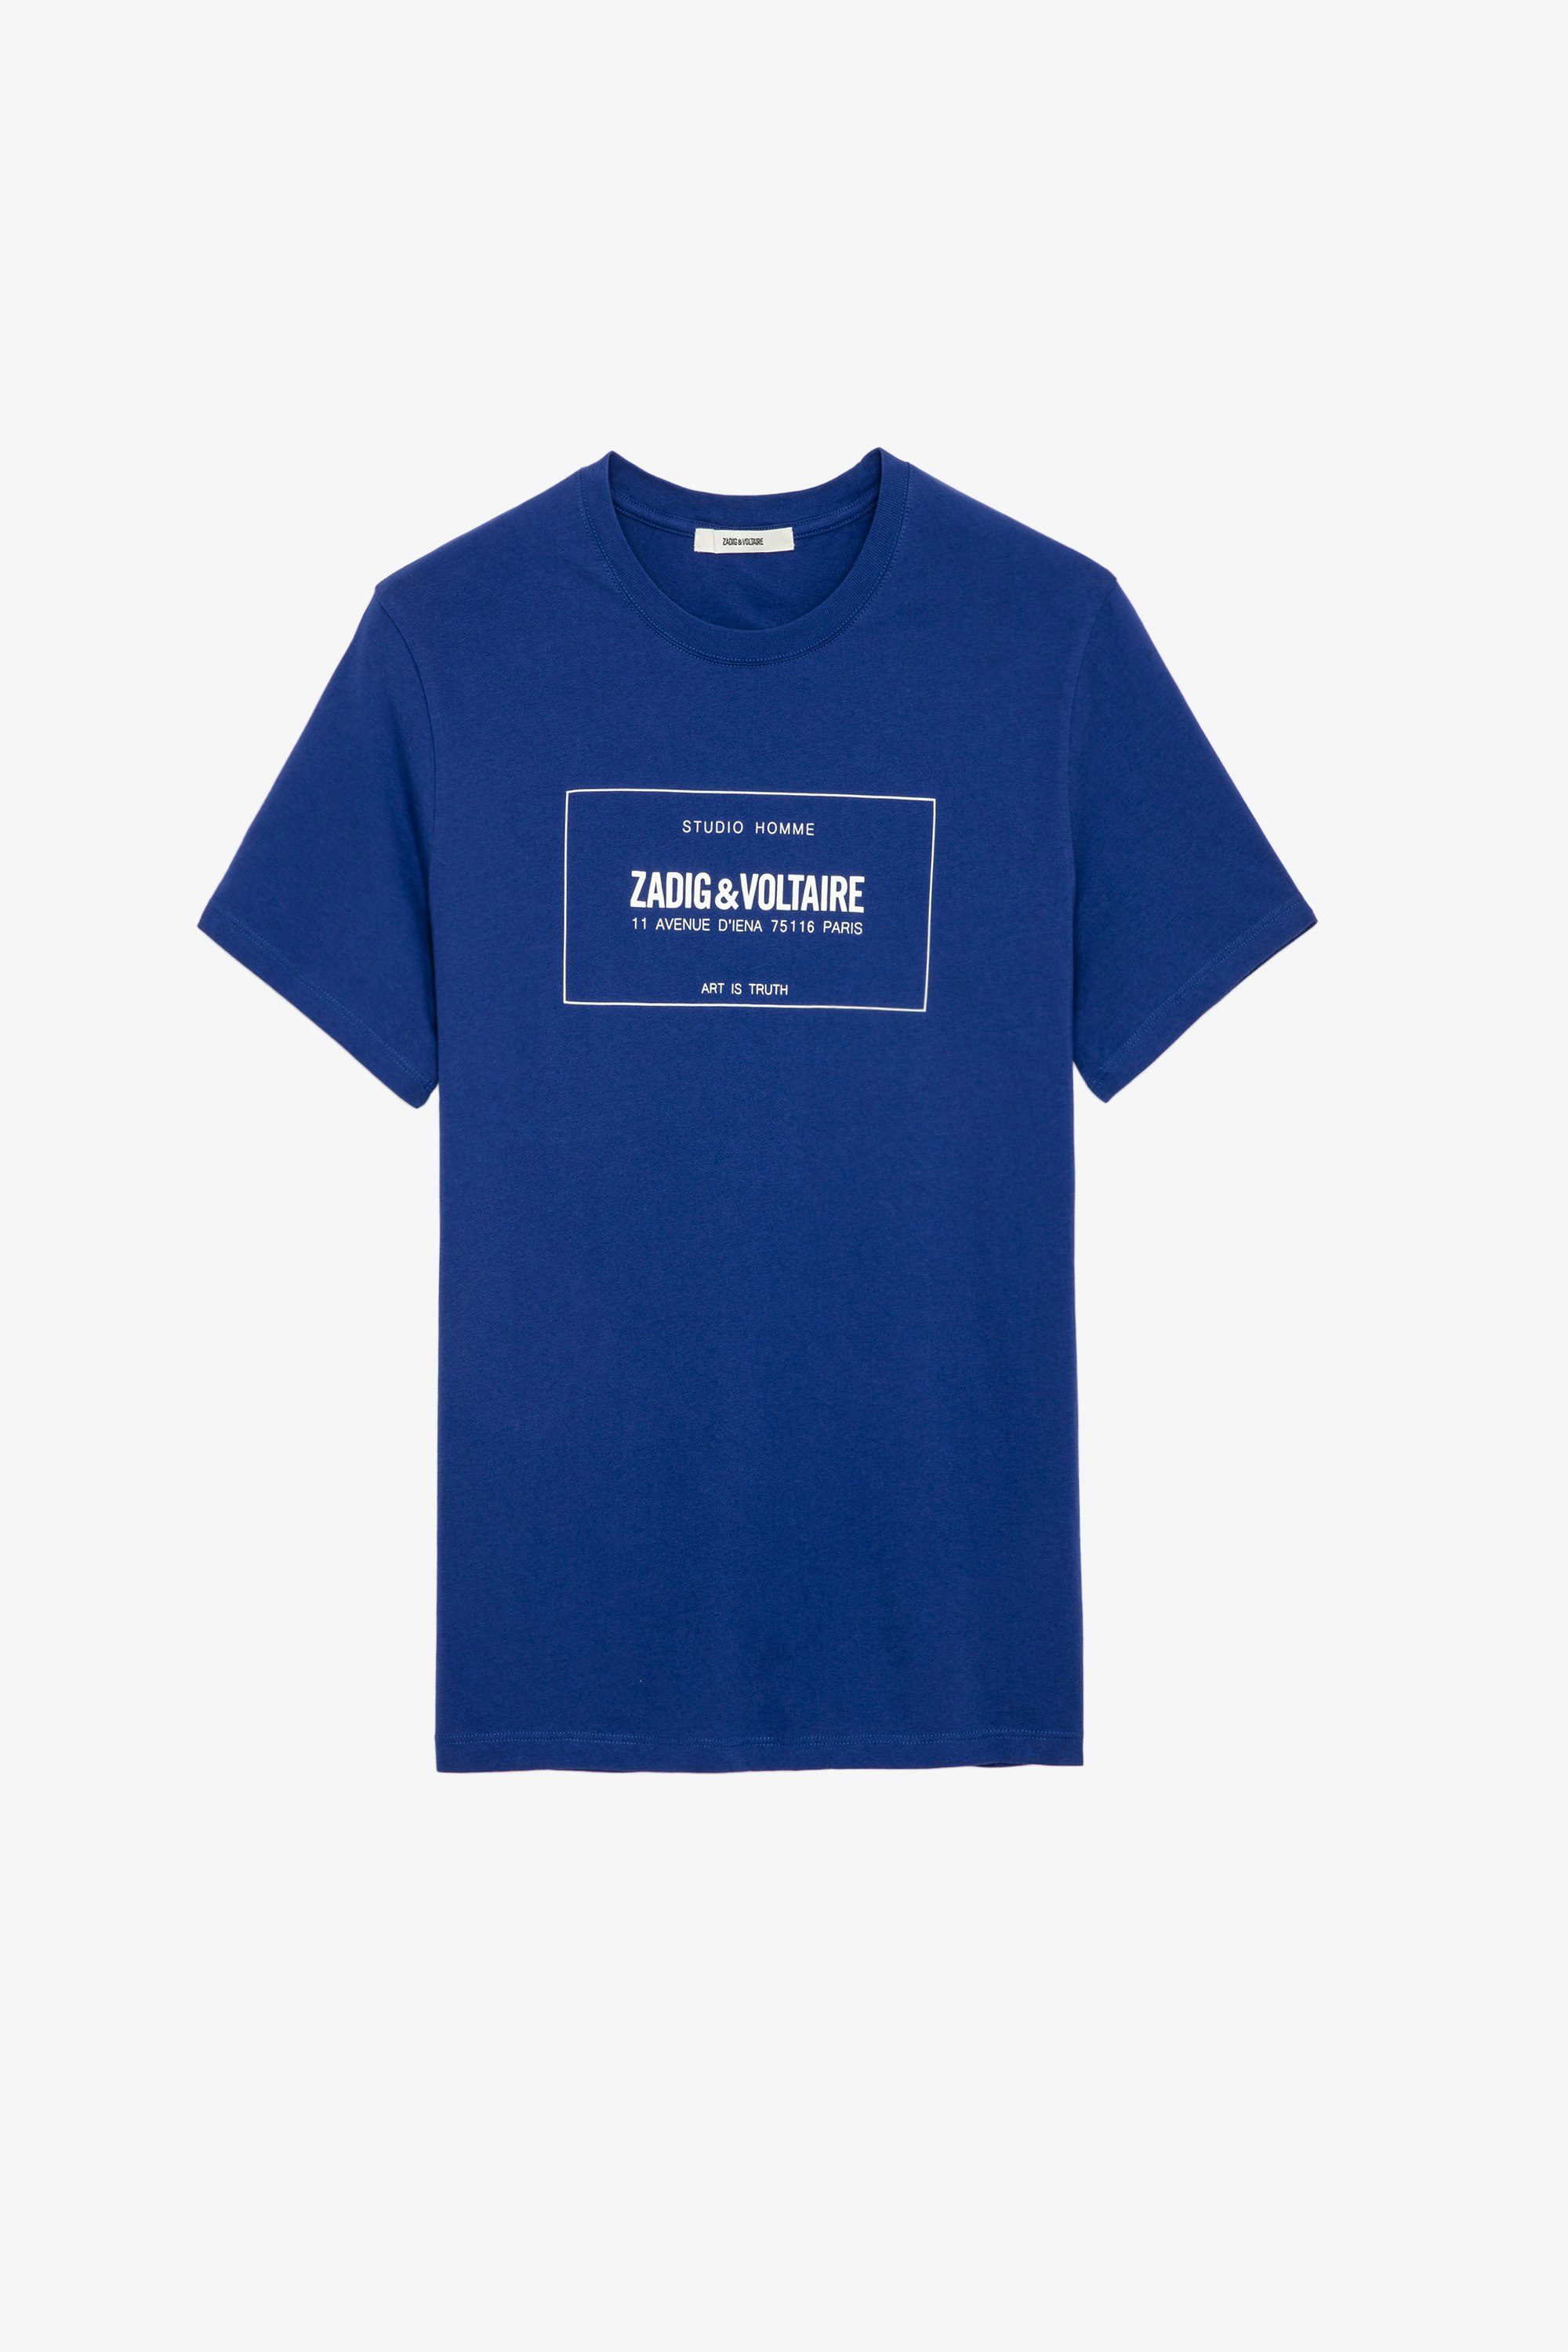 Ted Blason T-shirt Men's blue cotton T-shirt 